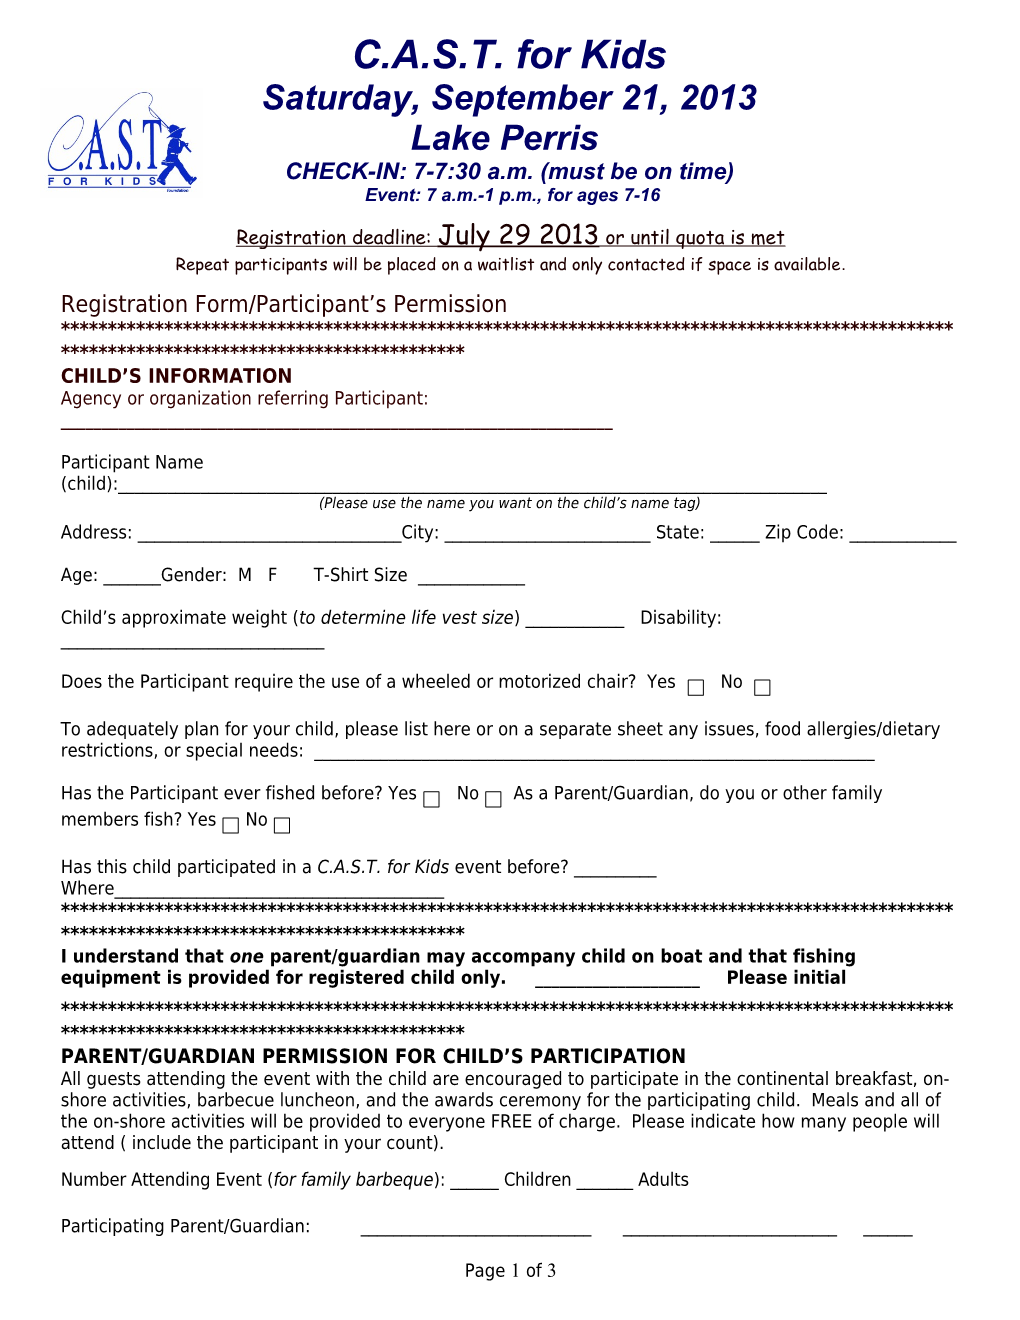 Perris Participant Registraion Form 09